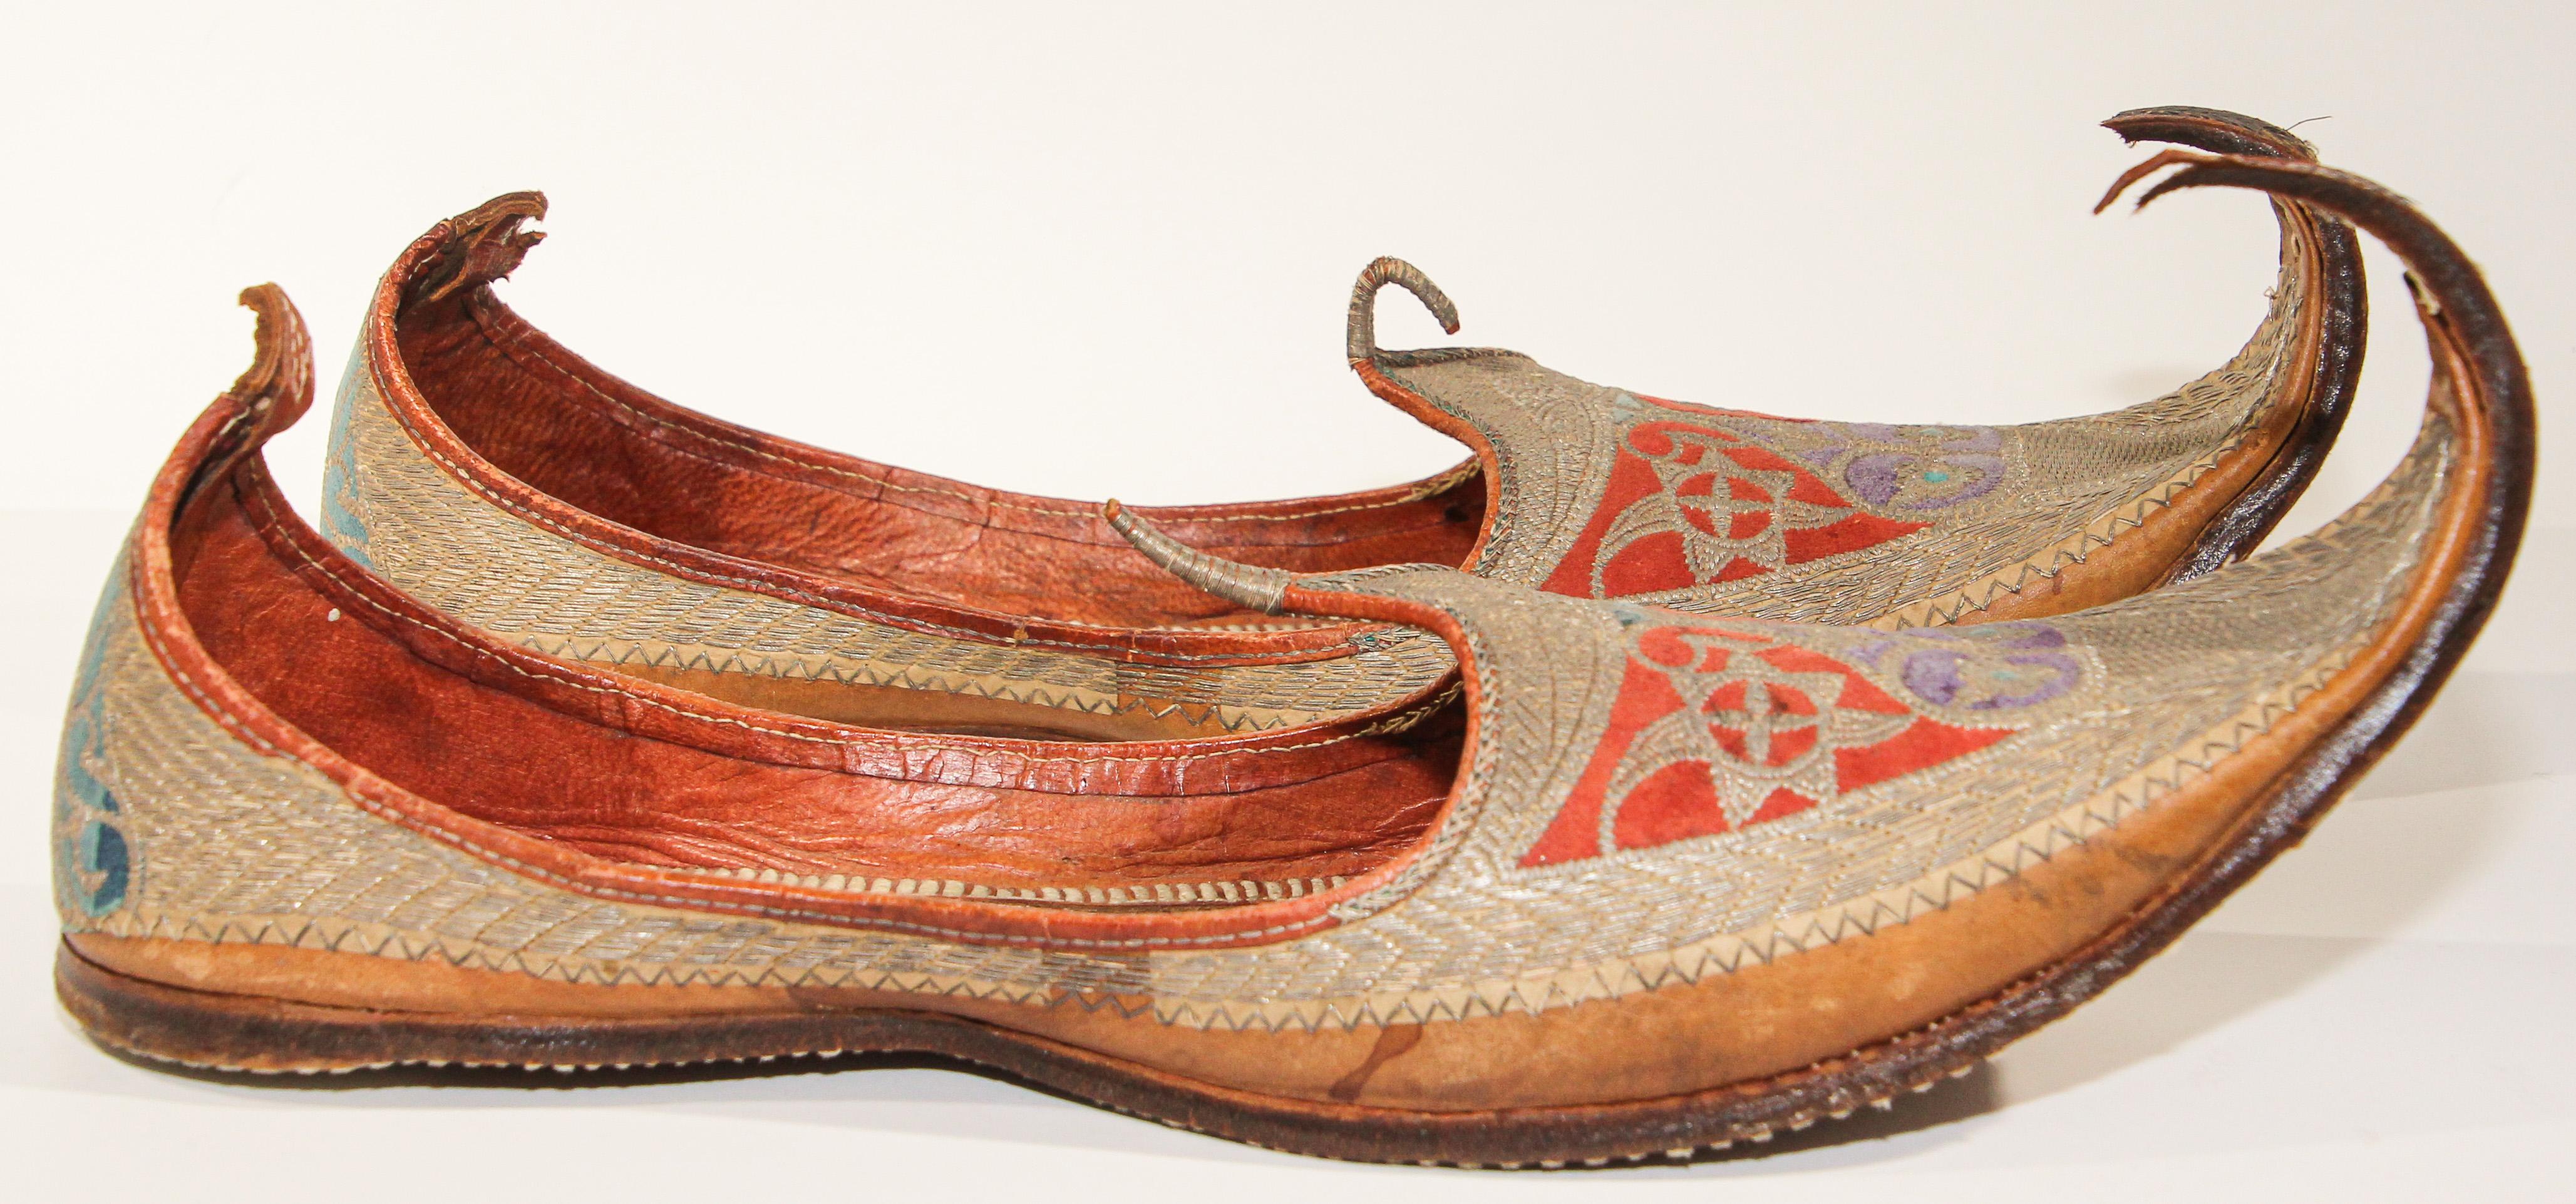 Cuir Chaussures mogholes anciennes en cuir avec broderie dorée en vente